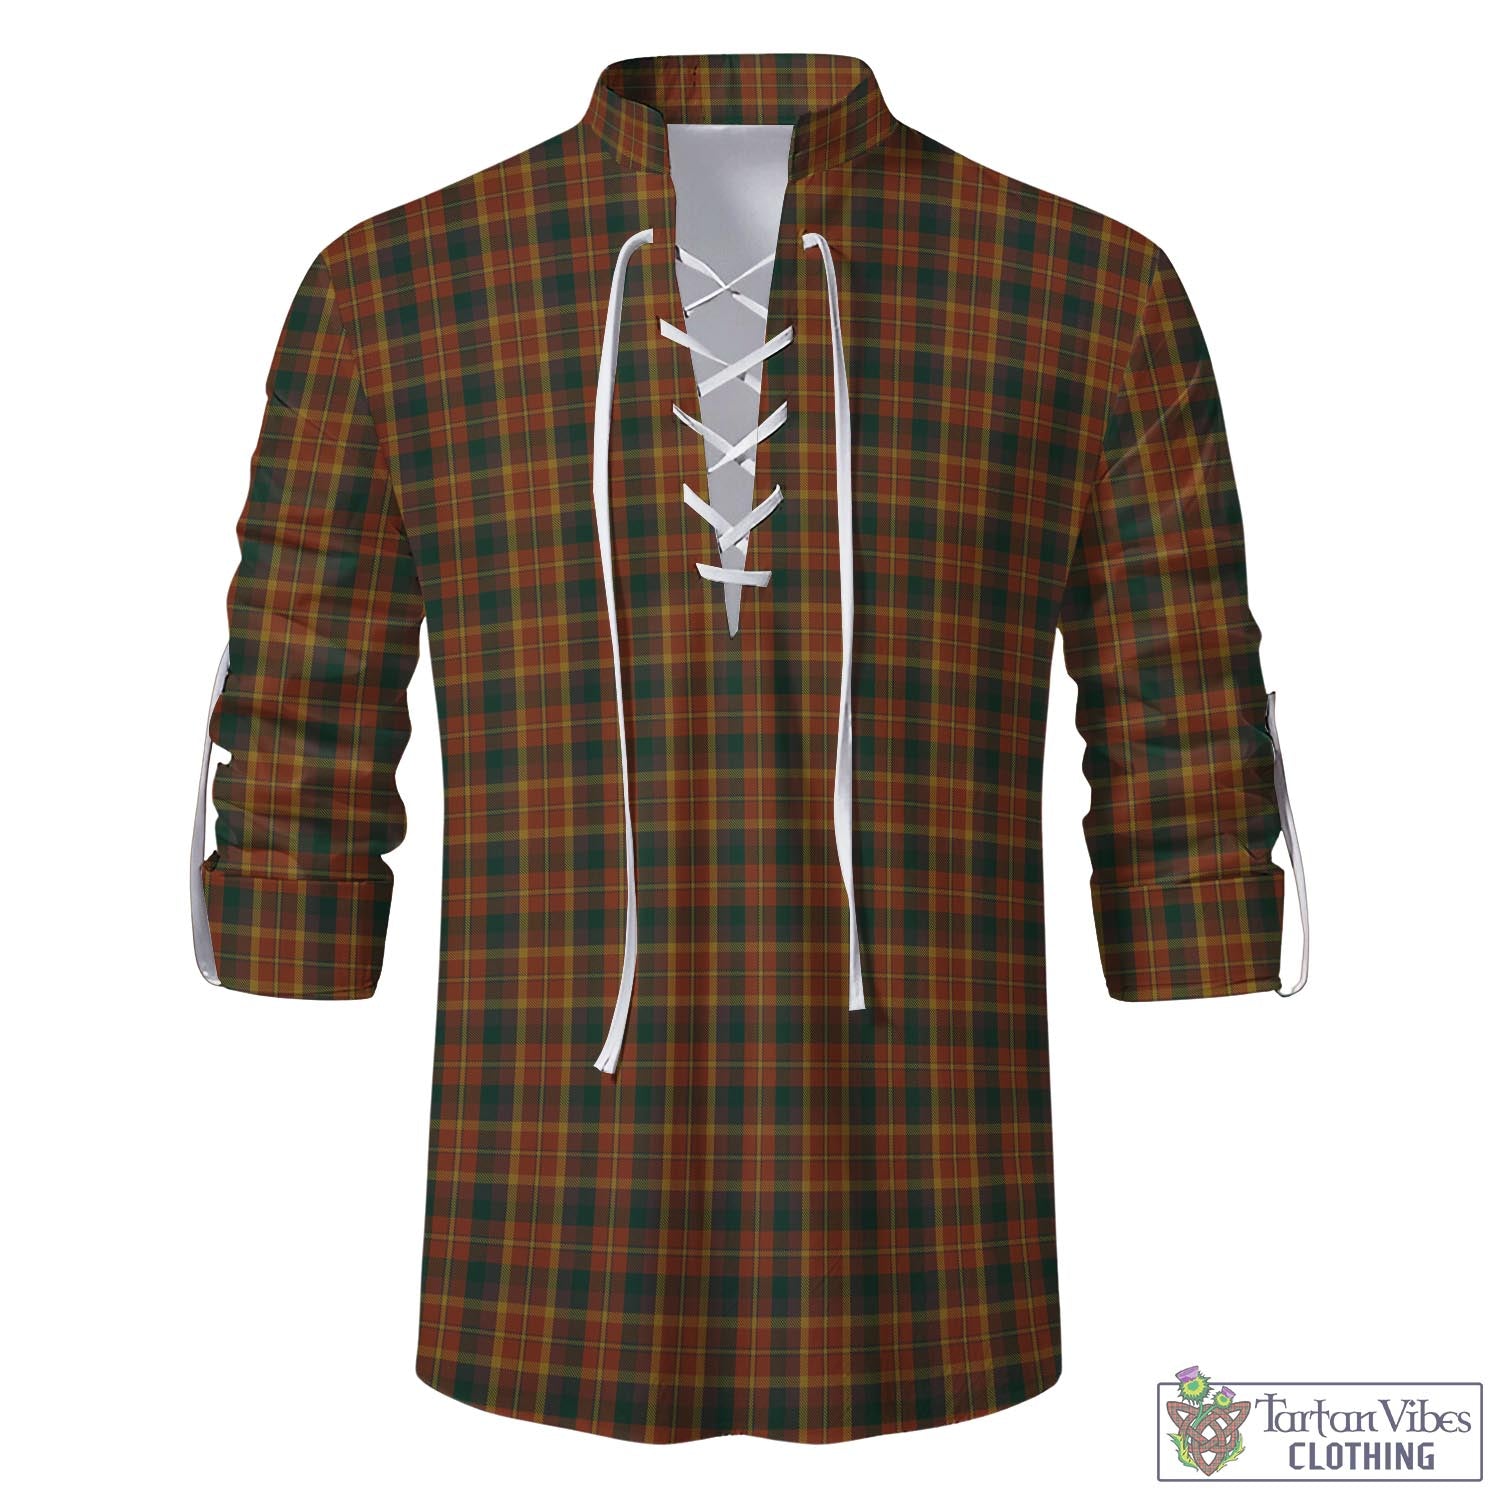 Tartan Vibes Clothing Monaghan County Ireland Tartan Men's Scottish Traditional Jacobite Ghillie Kilt Shirt